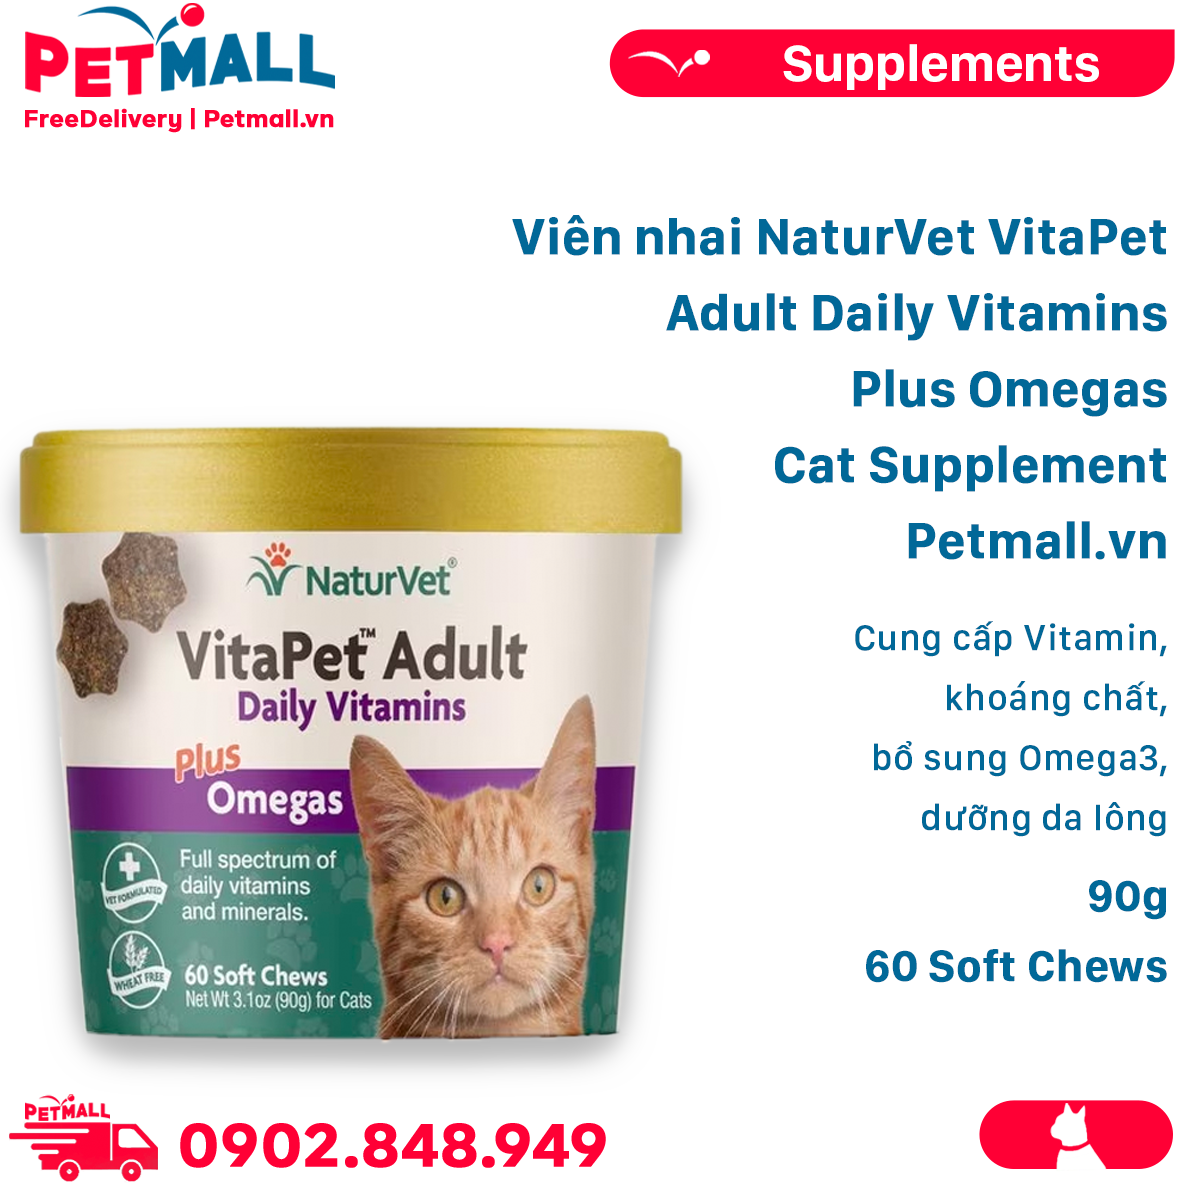 Viên nhai NaturVet VitaPet Adult Daily Vitamins Plus Omegas Cat Supplement